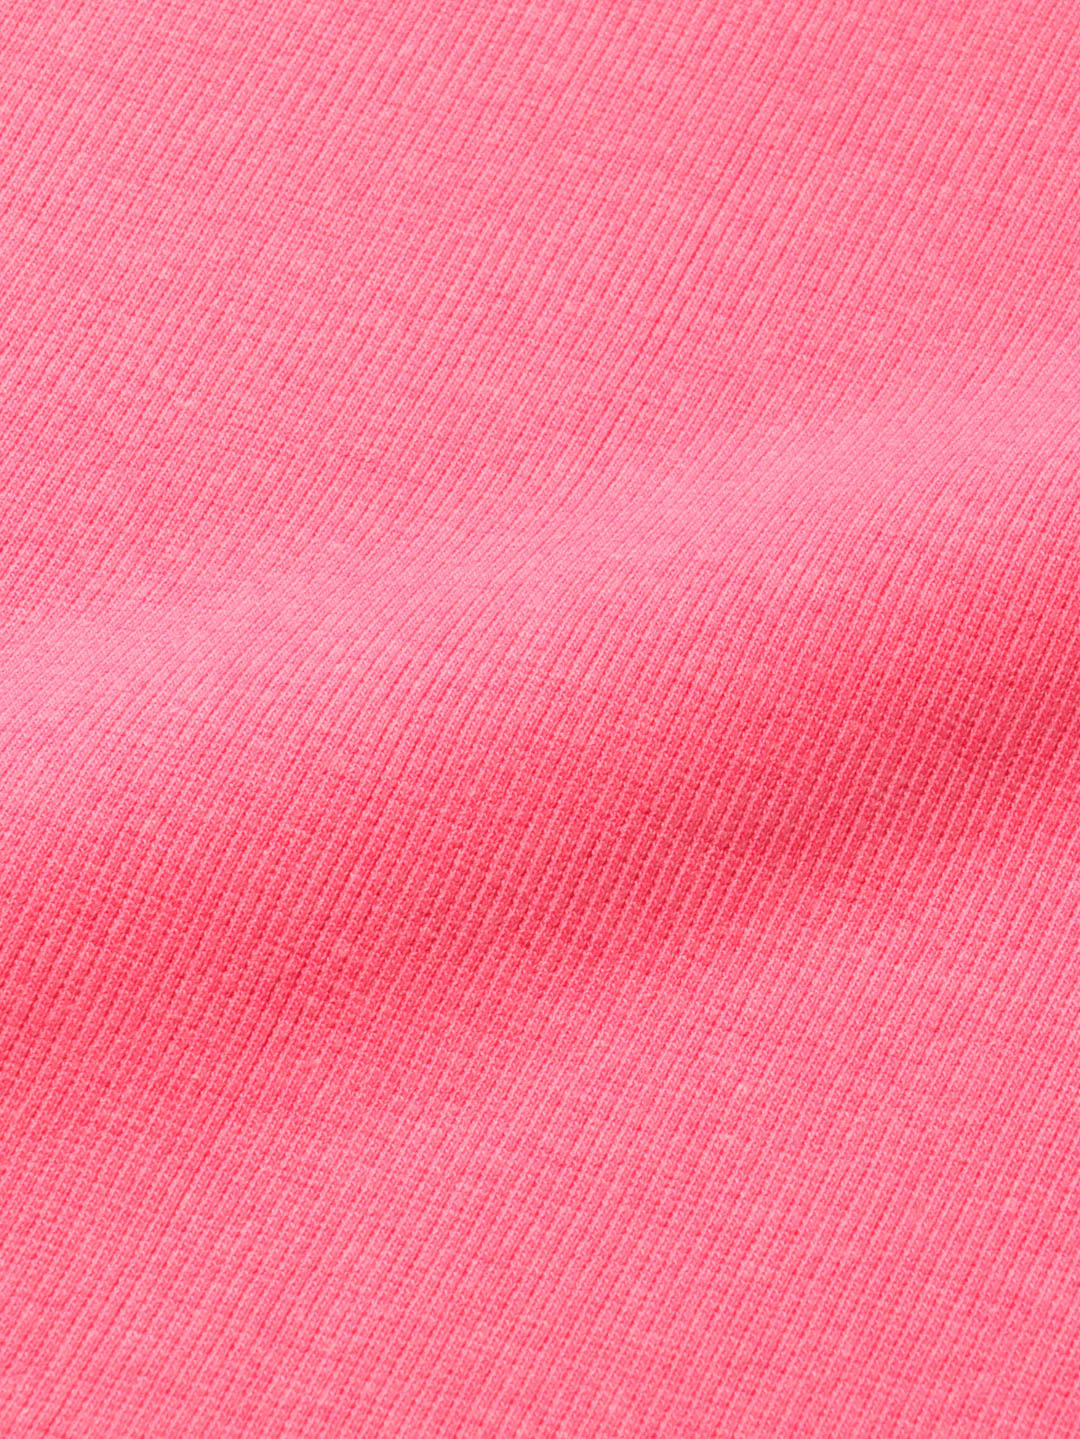 J&J Rippjersey | Bündchen neon pink extrabreit